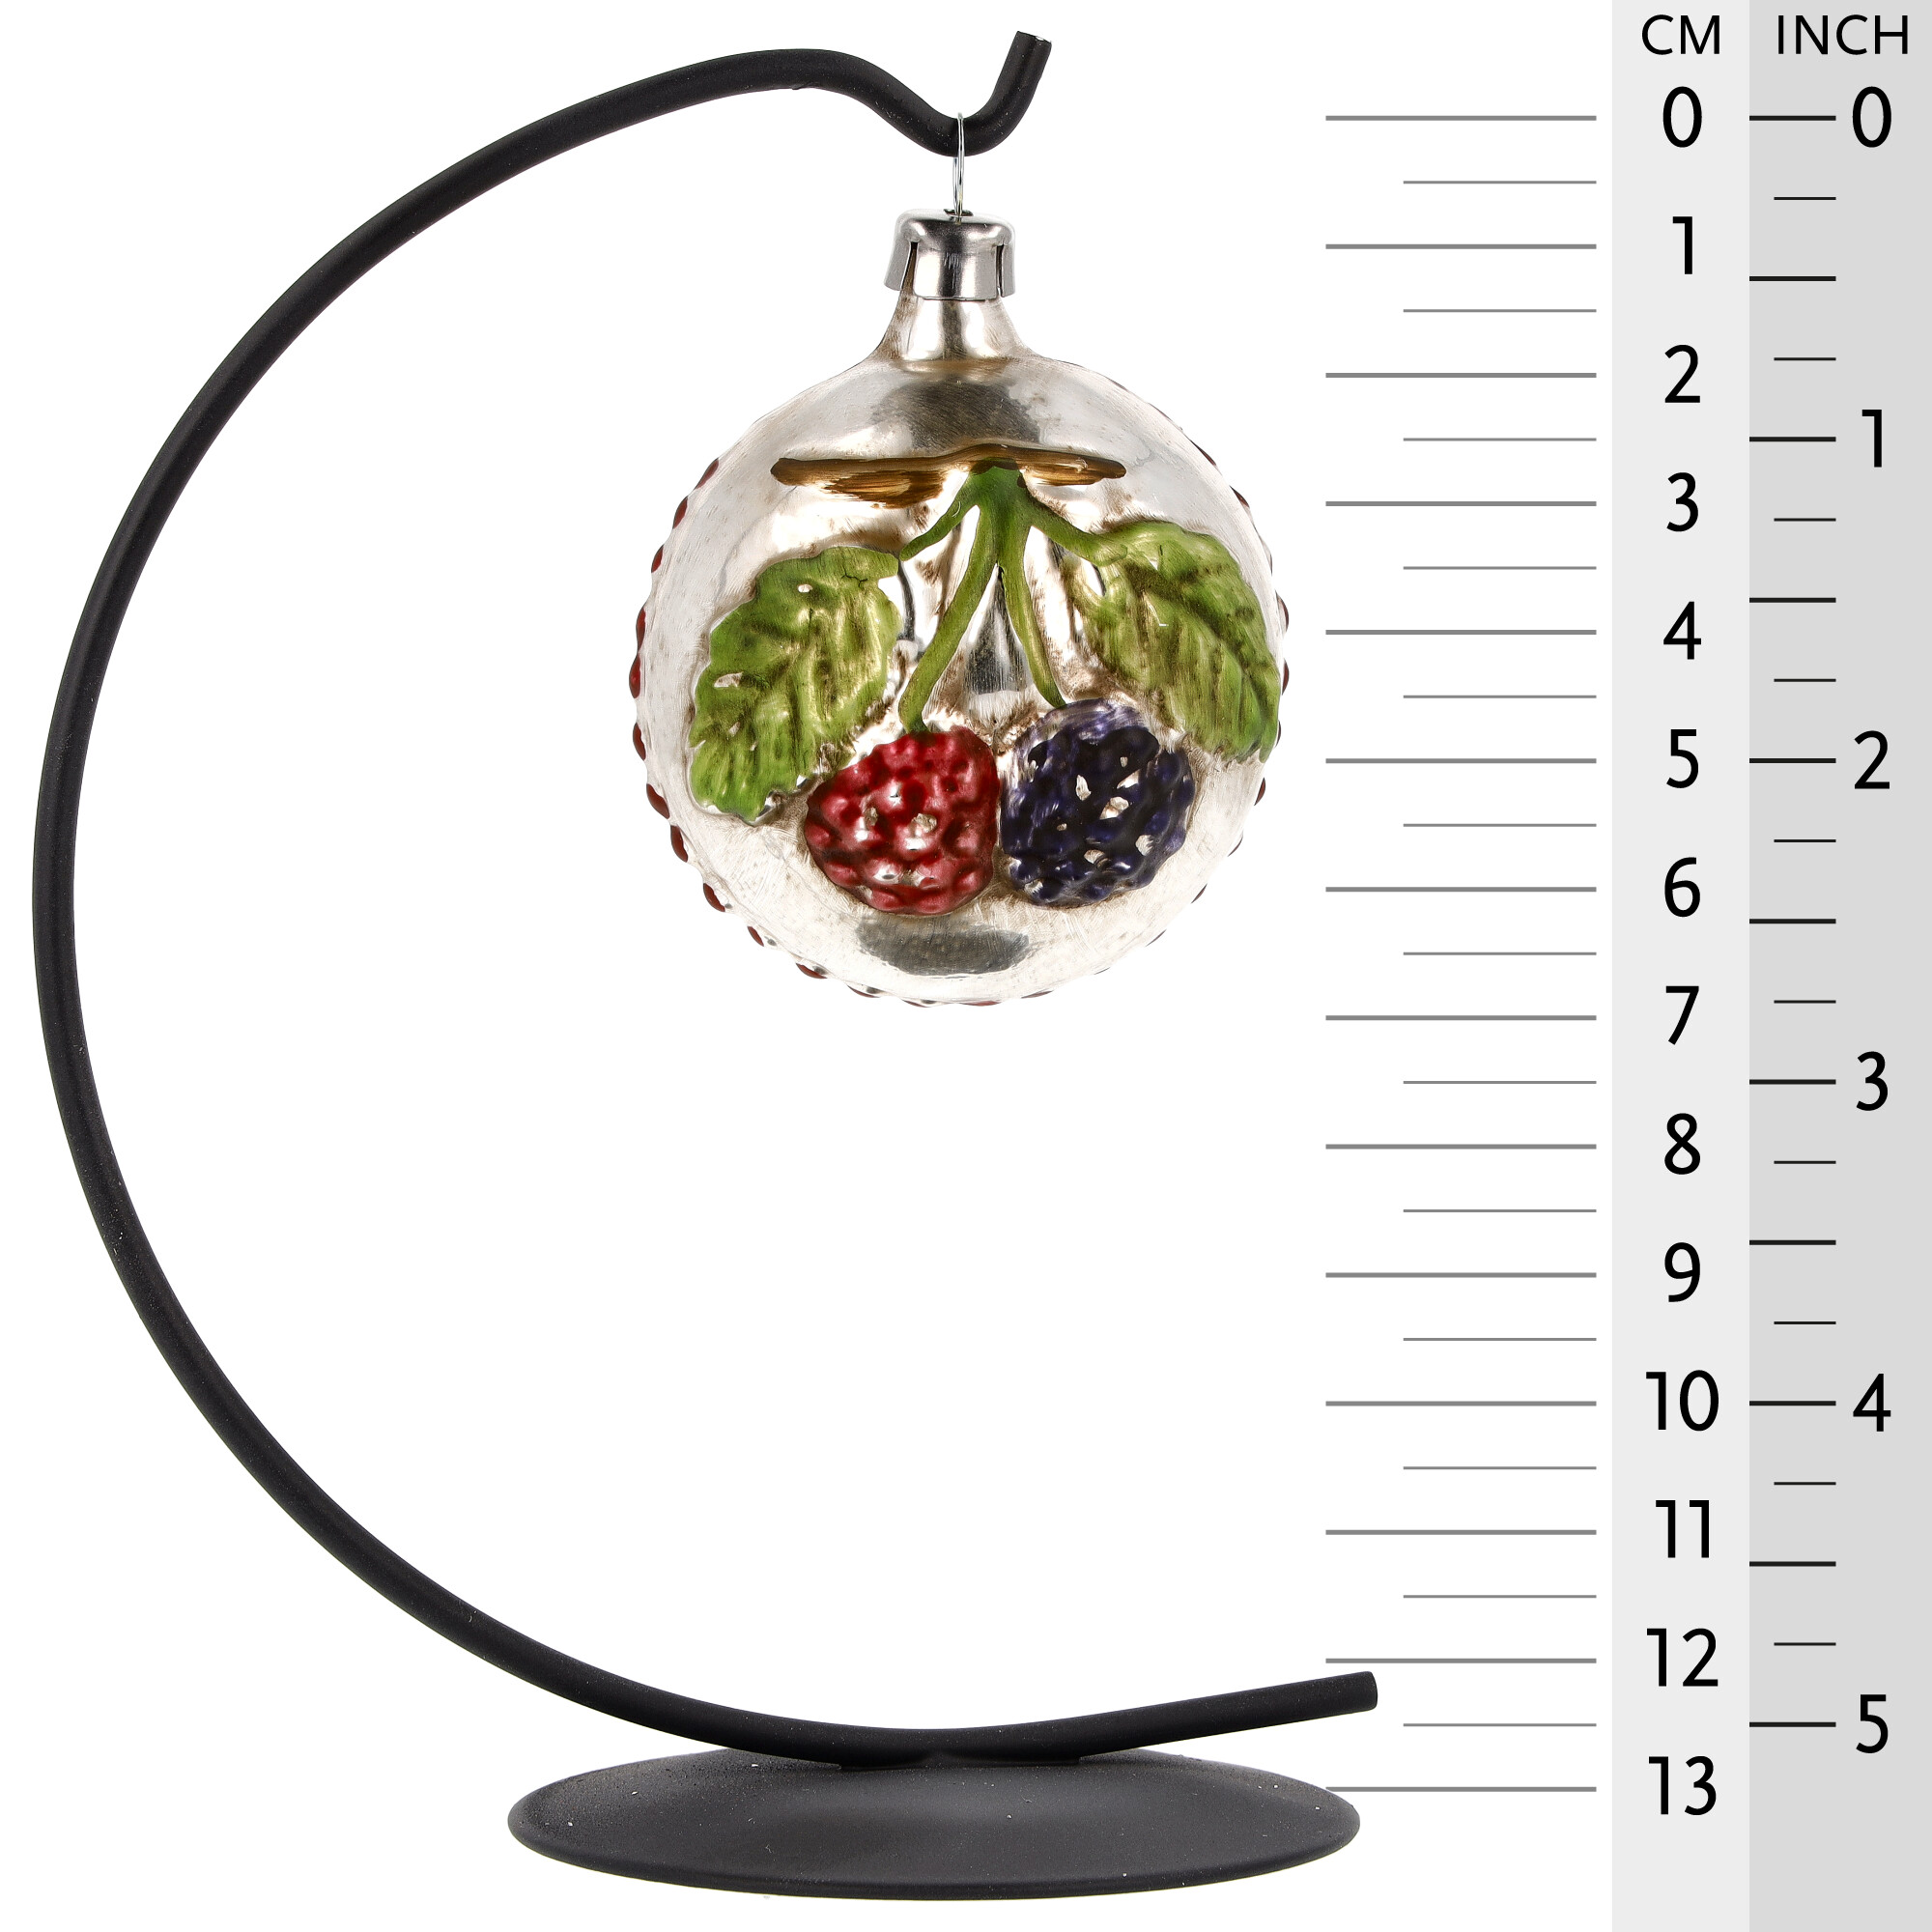 Retro Vintage style Christmas Glass Ornament - Set of 3 ornaments fruit basket